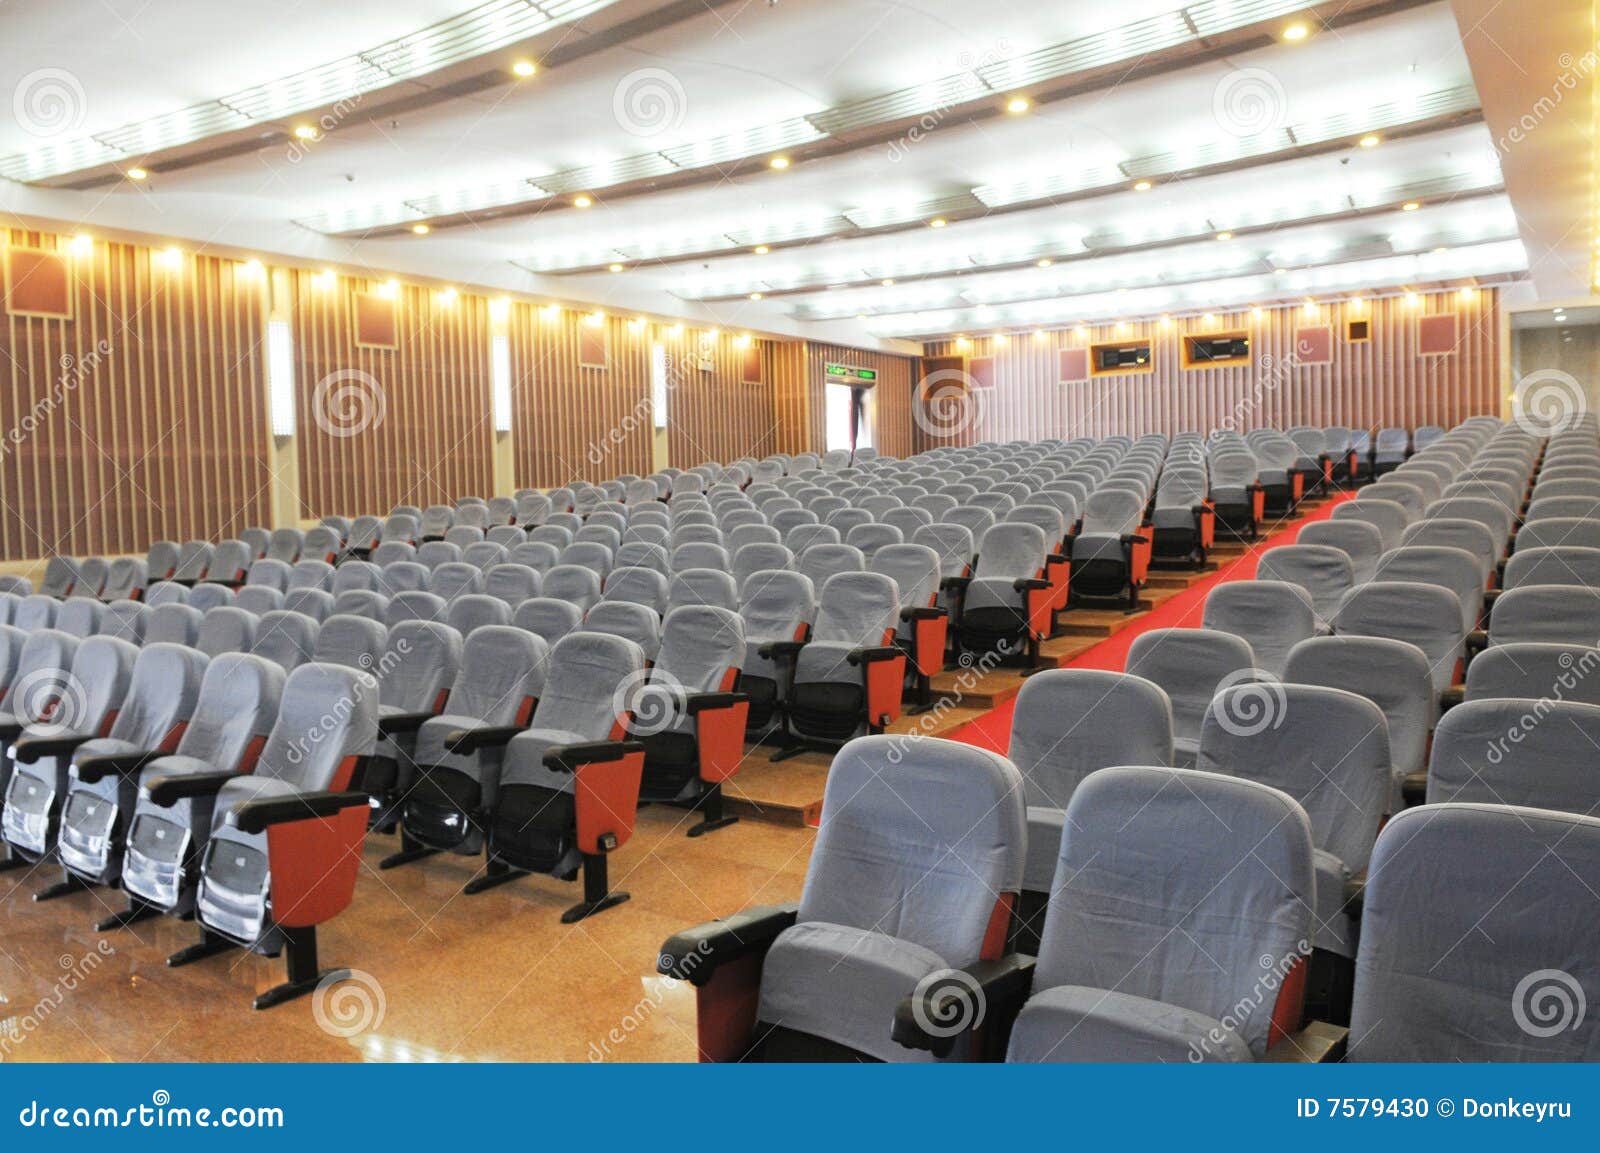 the auditorium with seats